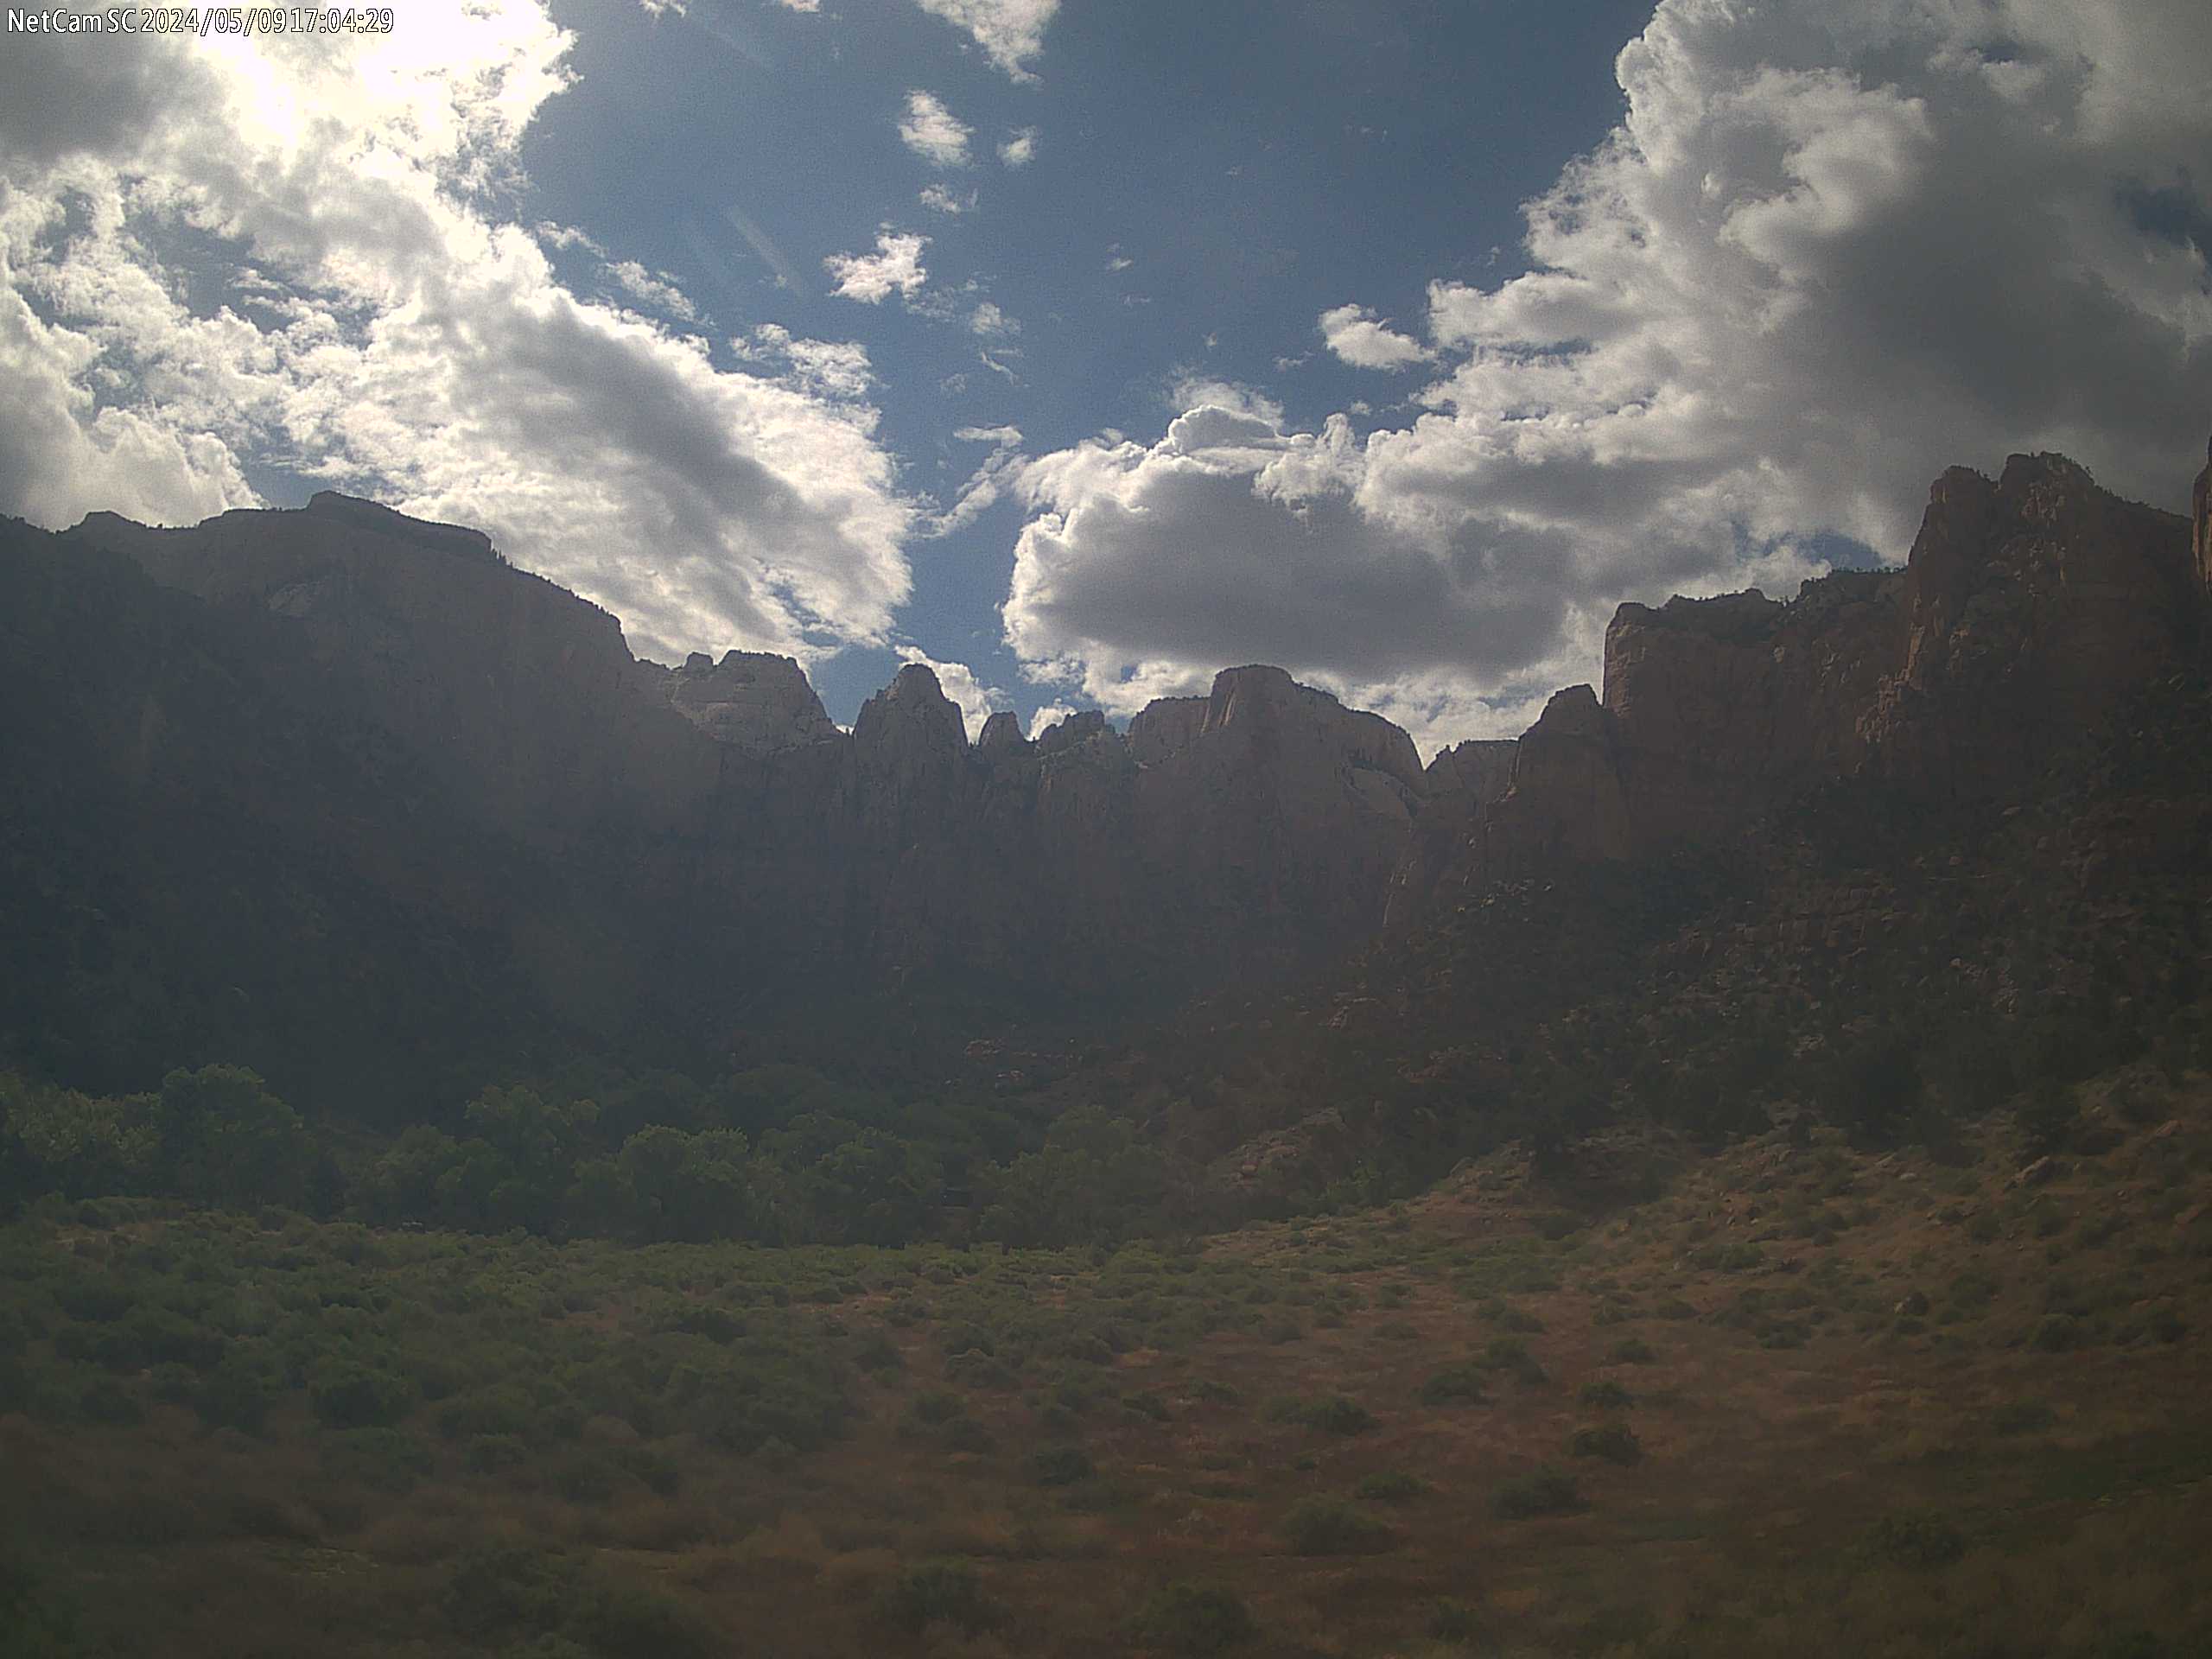 Zion National Park, Utah Vie. 17:05